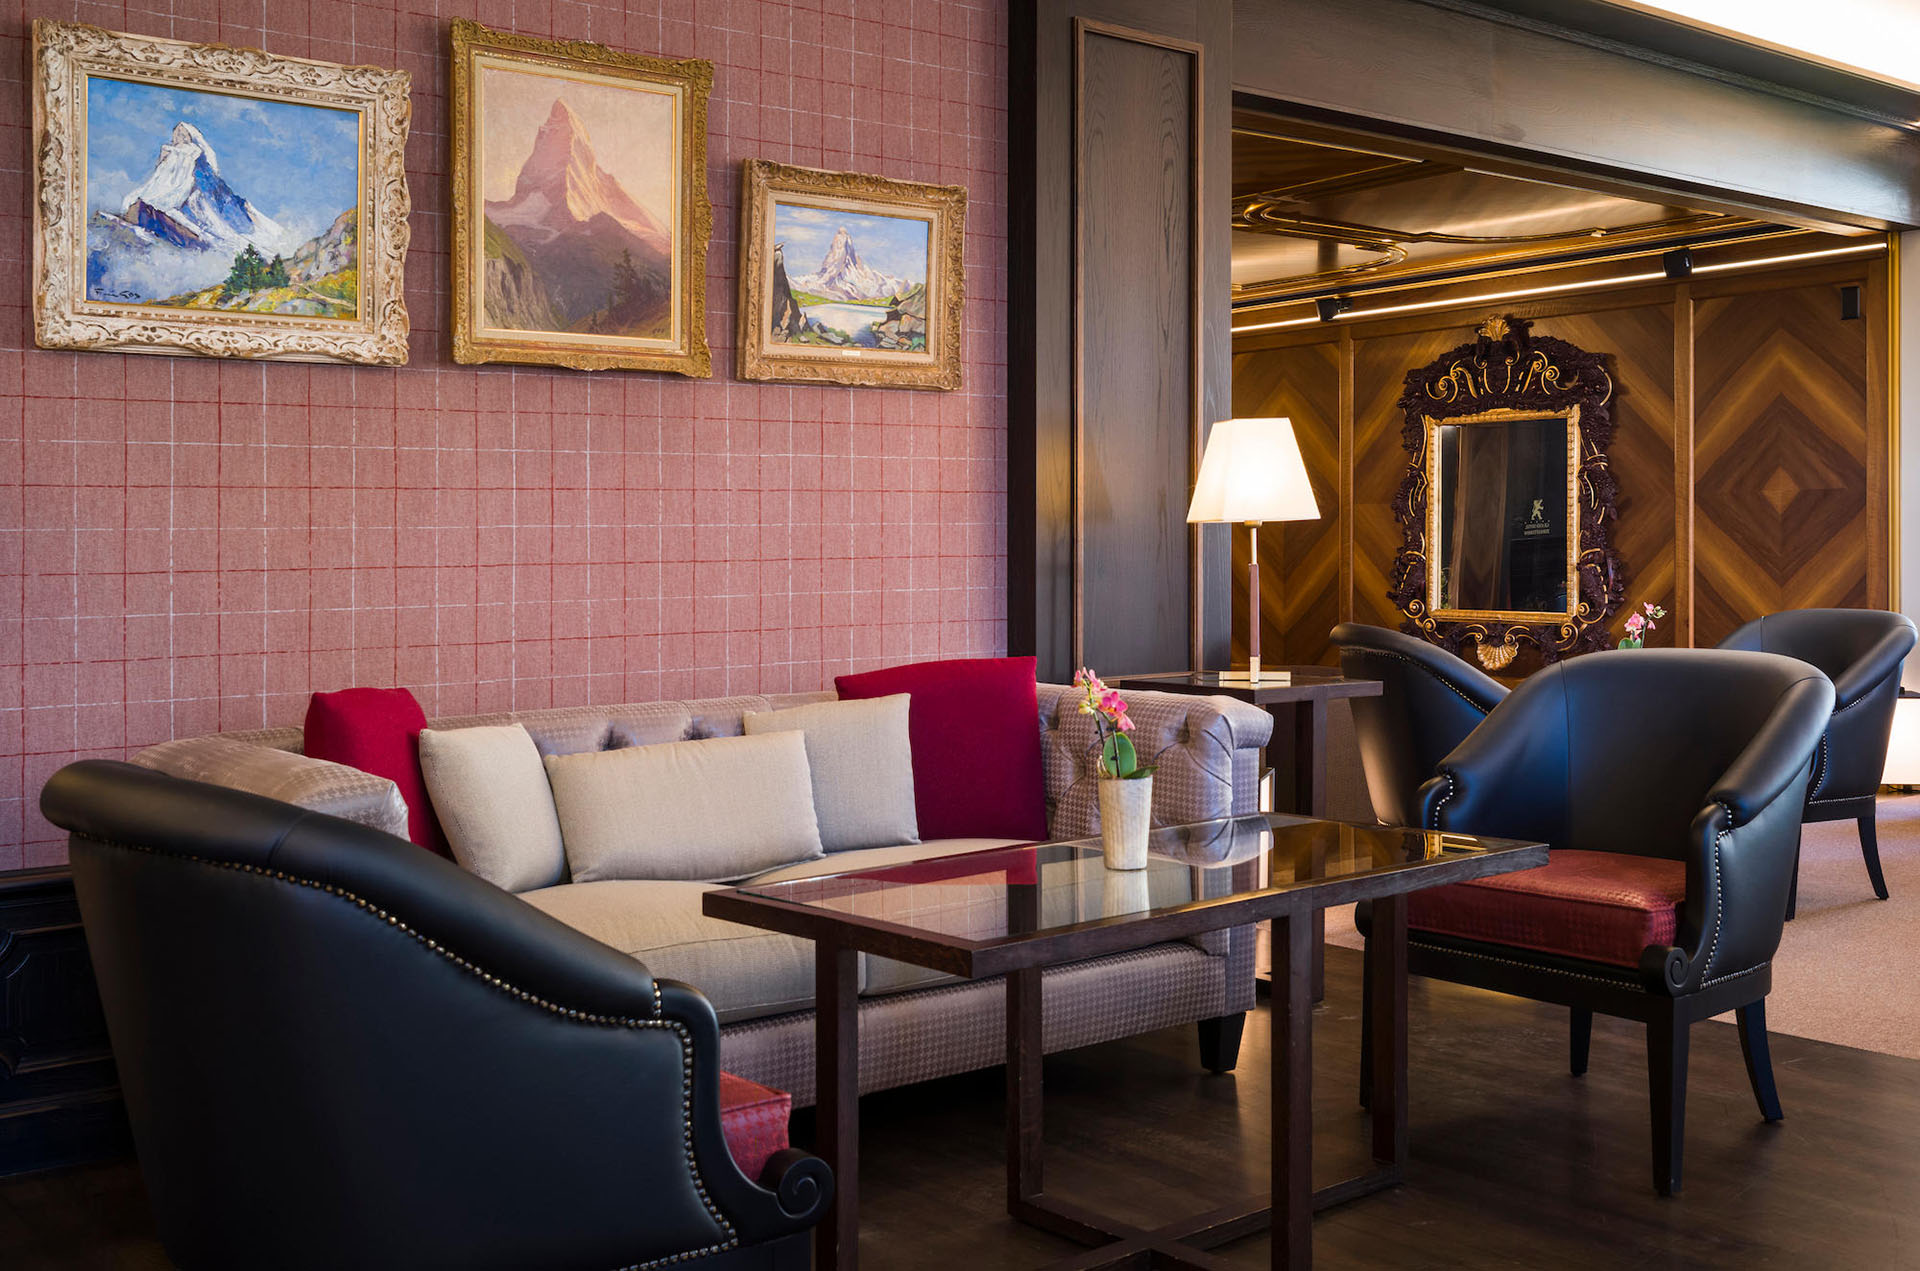 How Do You Do? Bar Zermatt Lounge - Grand Hotel Zermatterhof